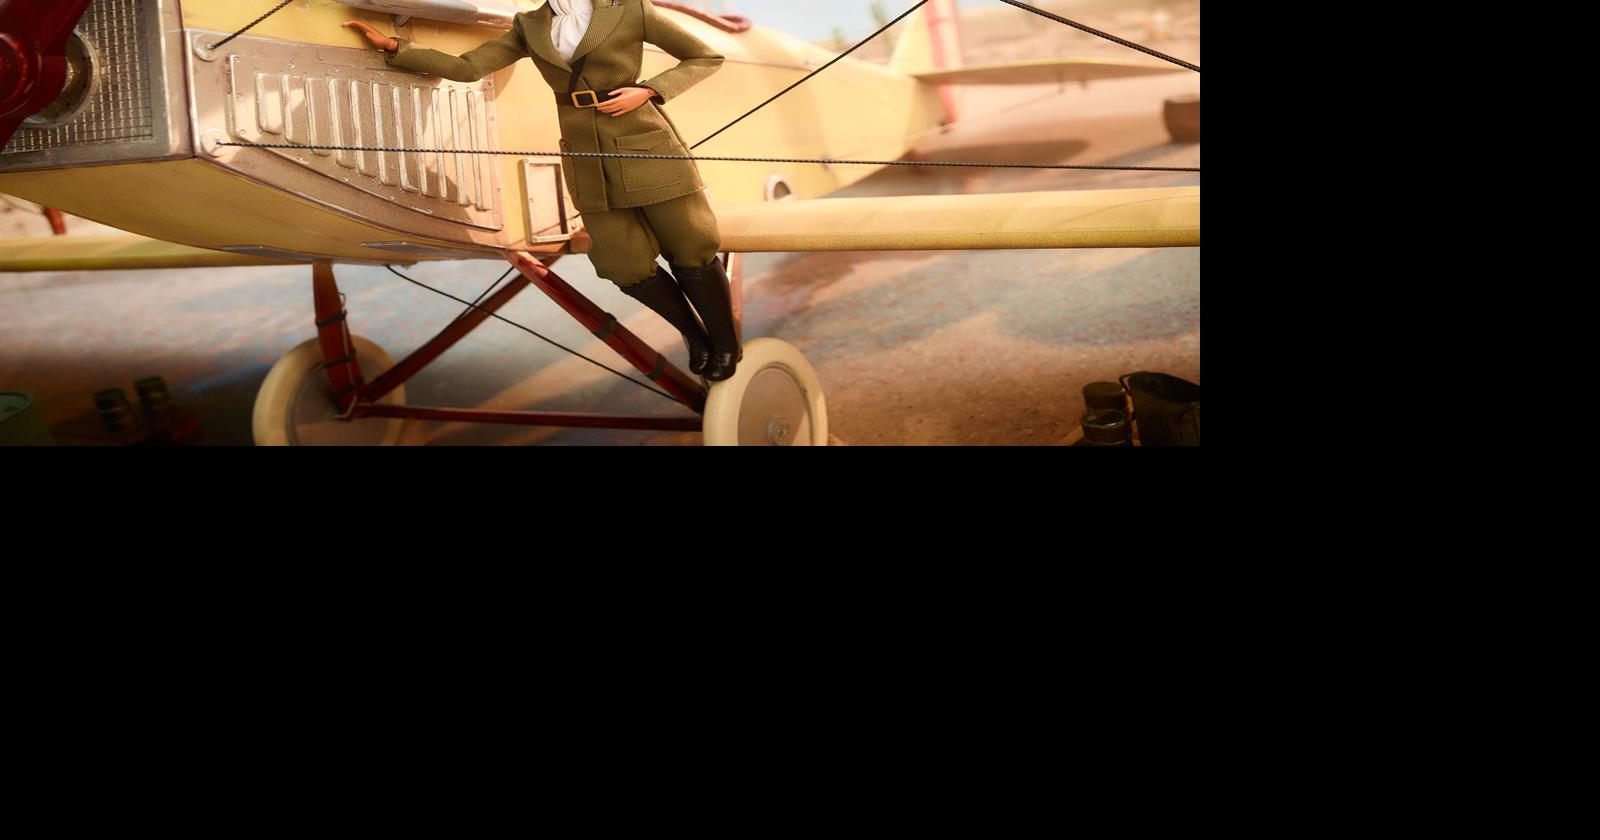 Bessie Coleman, pioneering pilot, now has her own Barbie